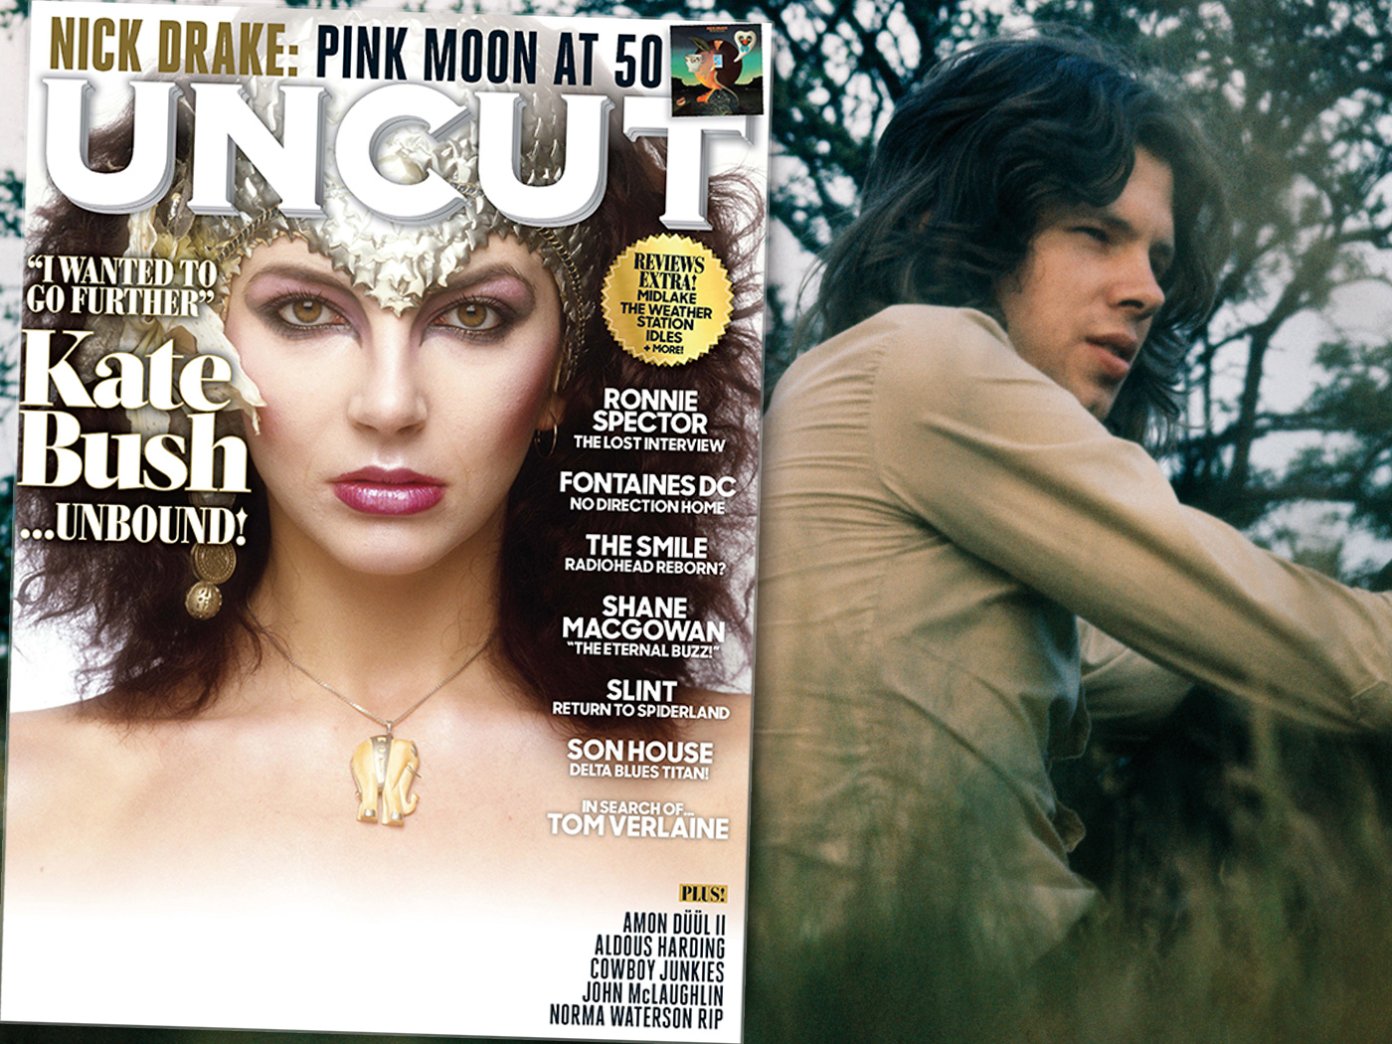 A deep dive into Nick Drake's legendary final album, Pink Moon UNCUT